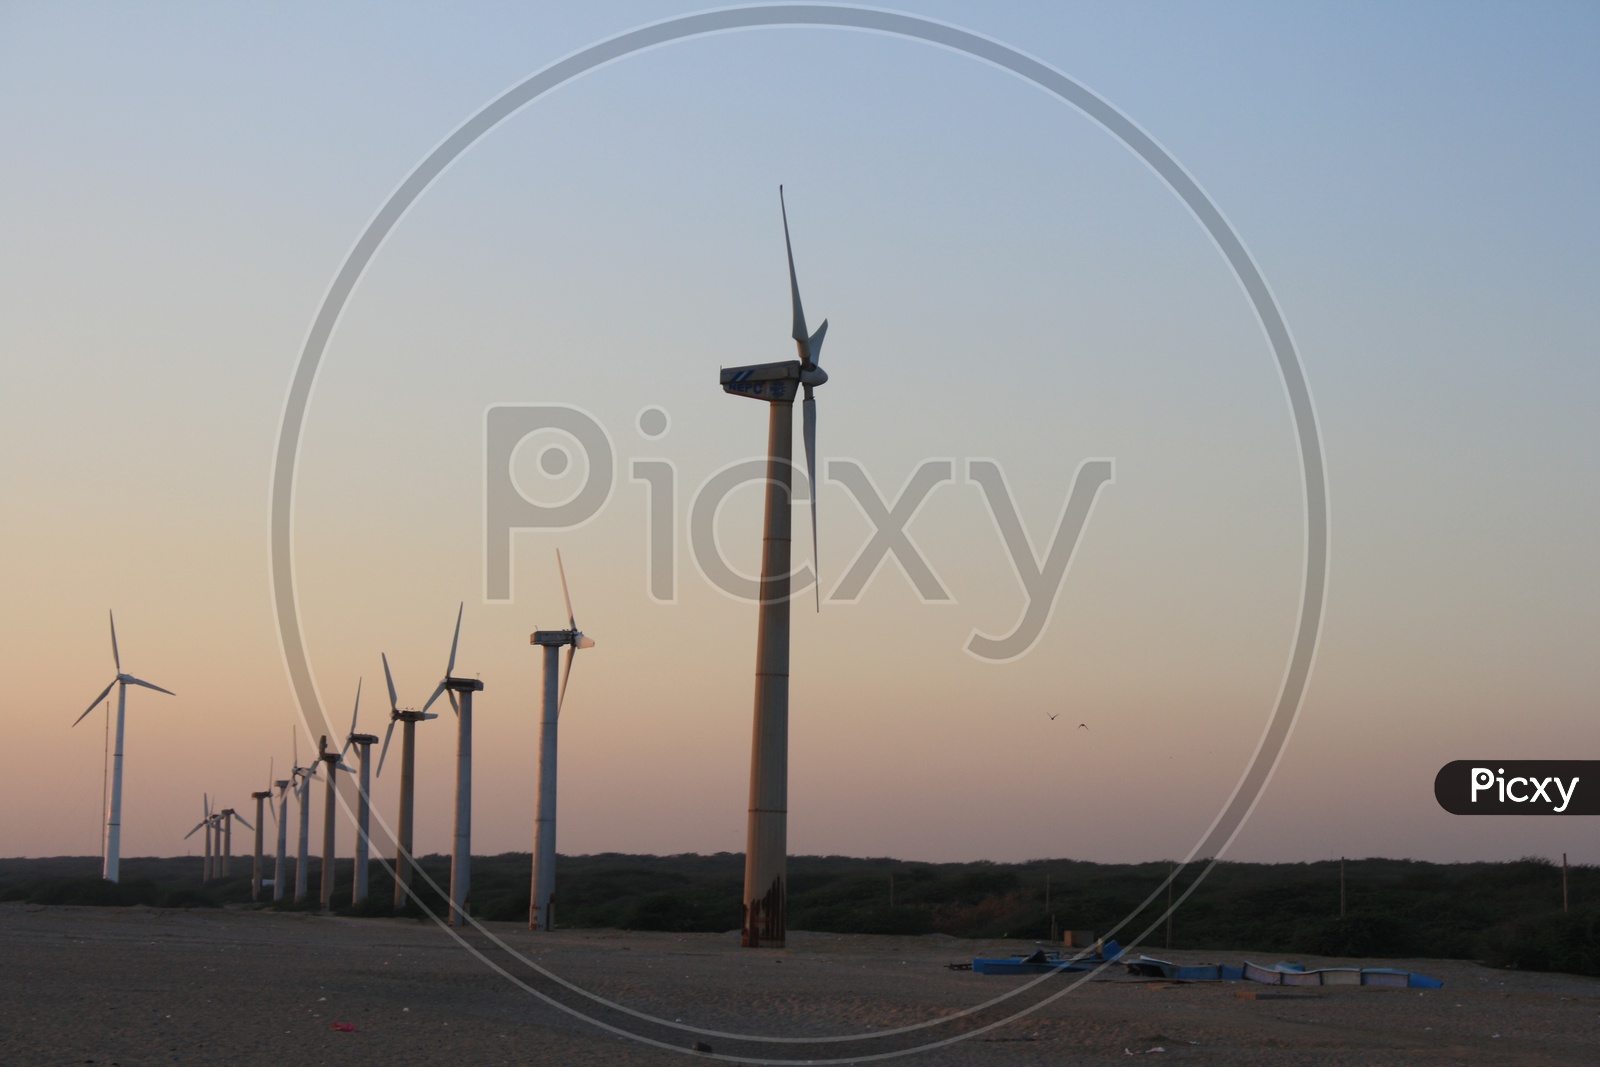 Windmills at Mandvi Beach